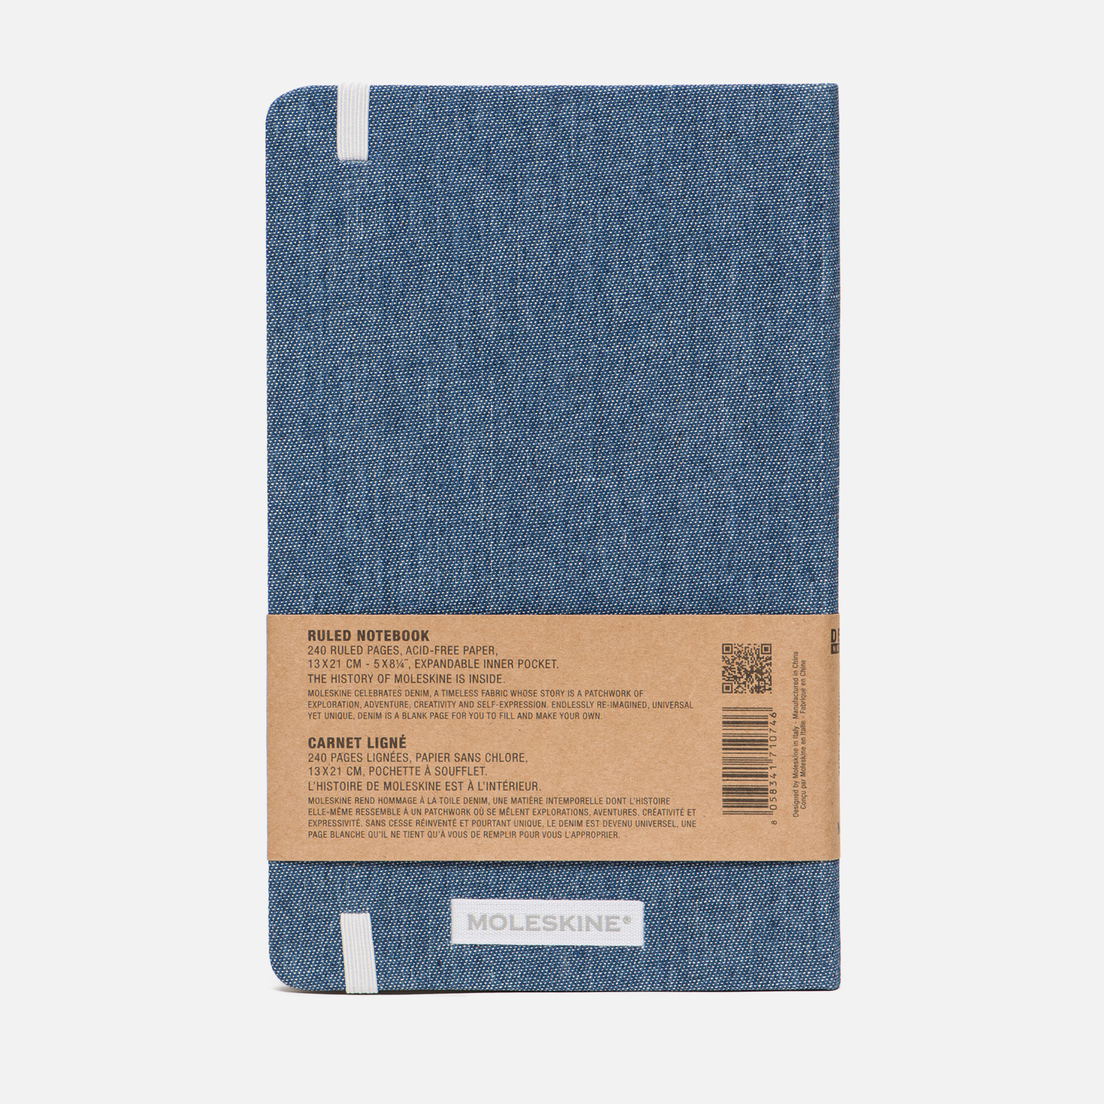 Moleskine Блокнот Limited Edition Denim Notebooks Large Ruler 240 pgs